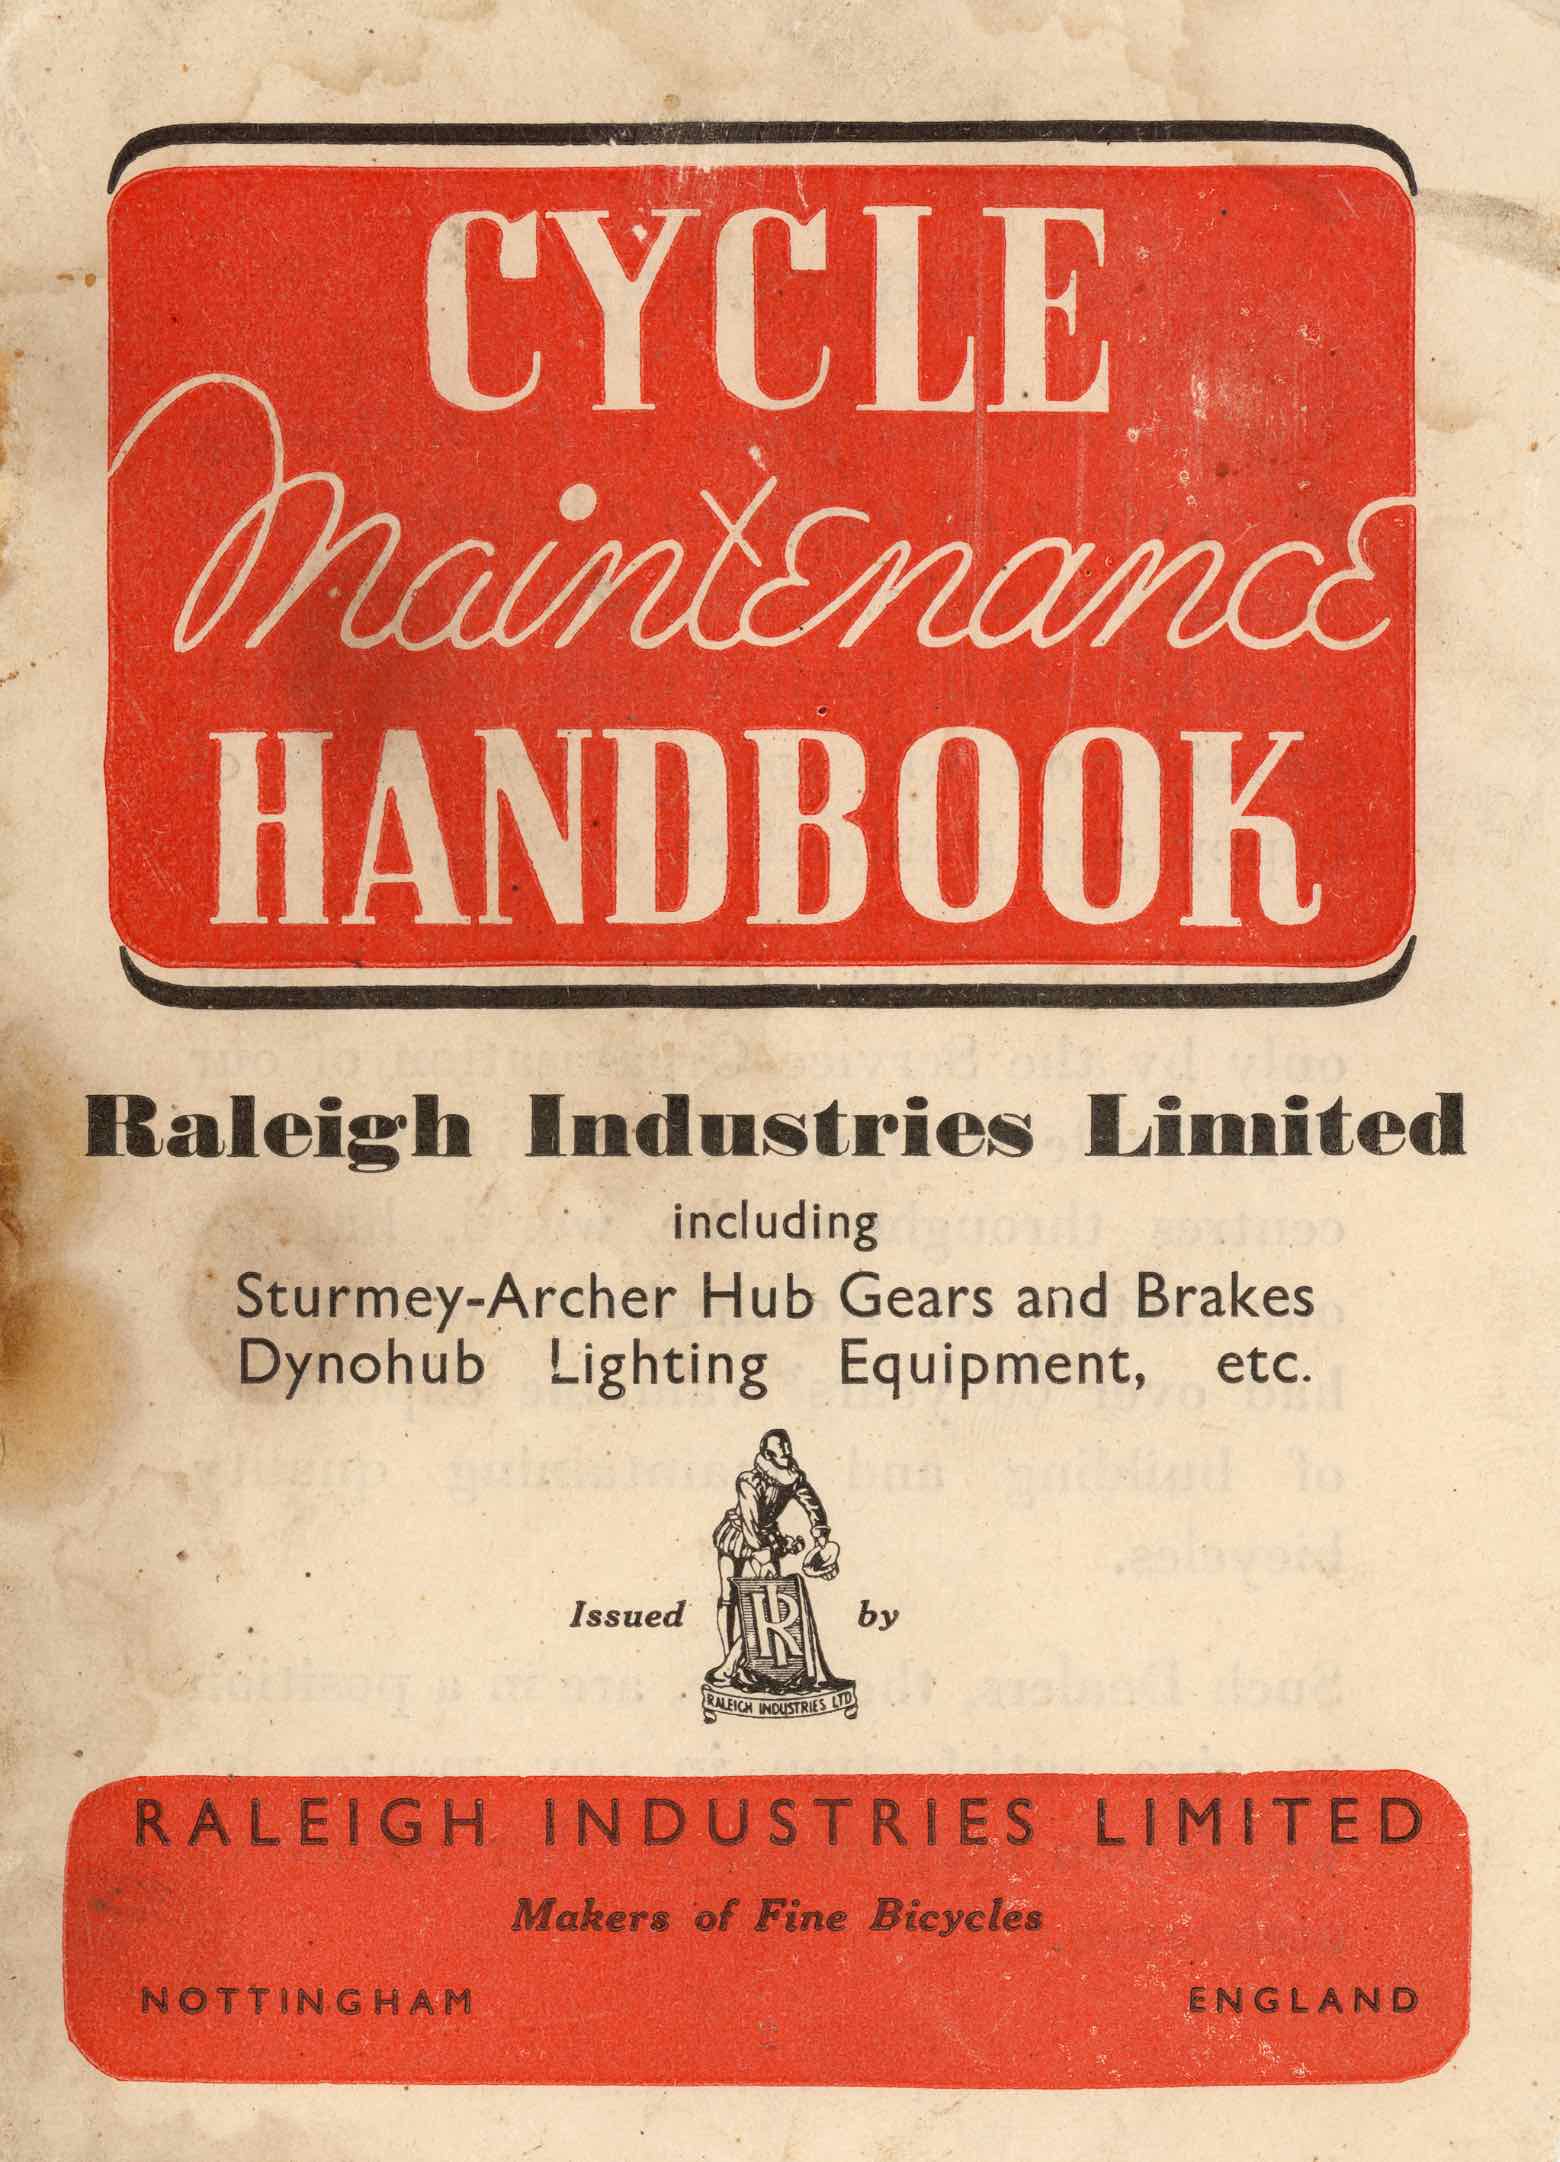 Raleigh - Cycle Maintenance Handbook 1952 page 1 main image